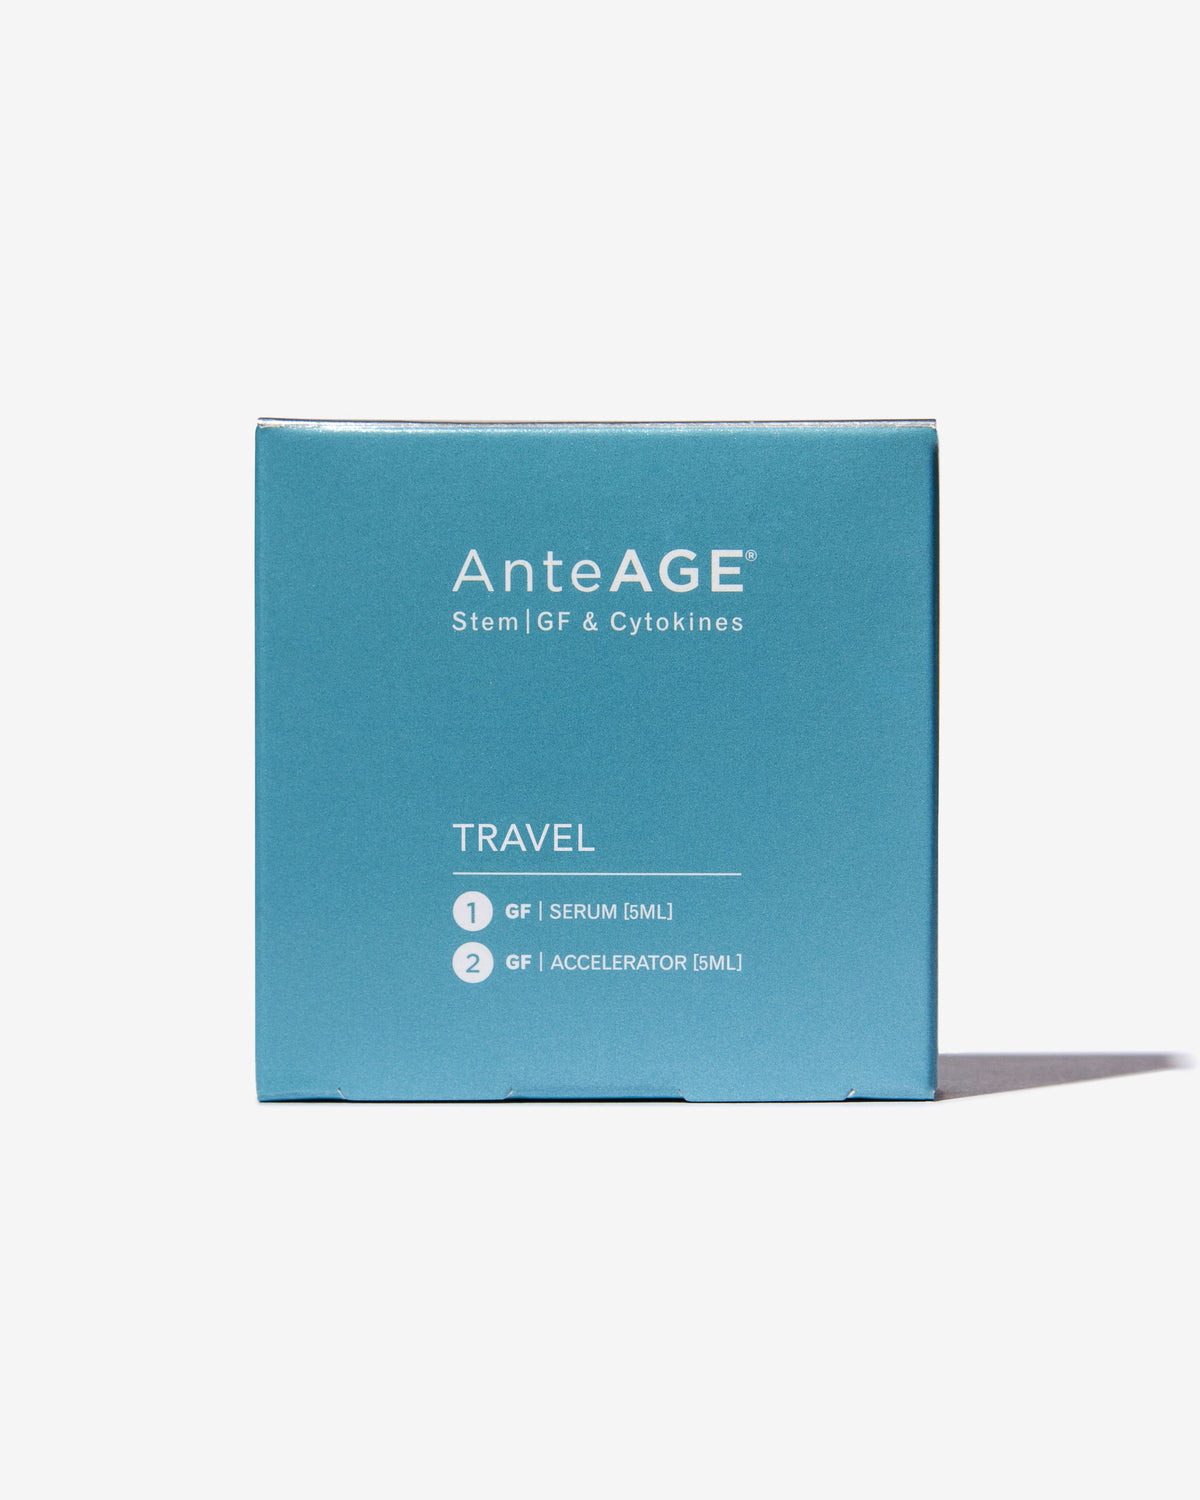 AnteAGE Serum and Accelerator Travel Kit